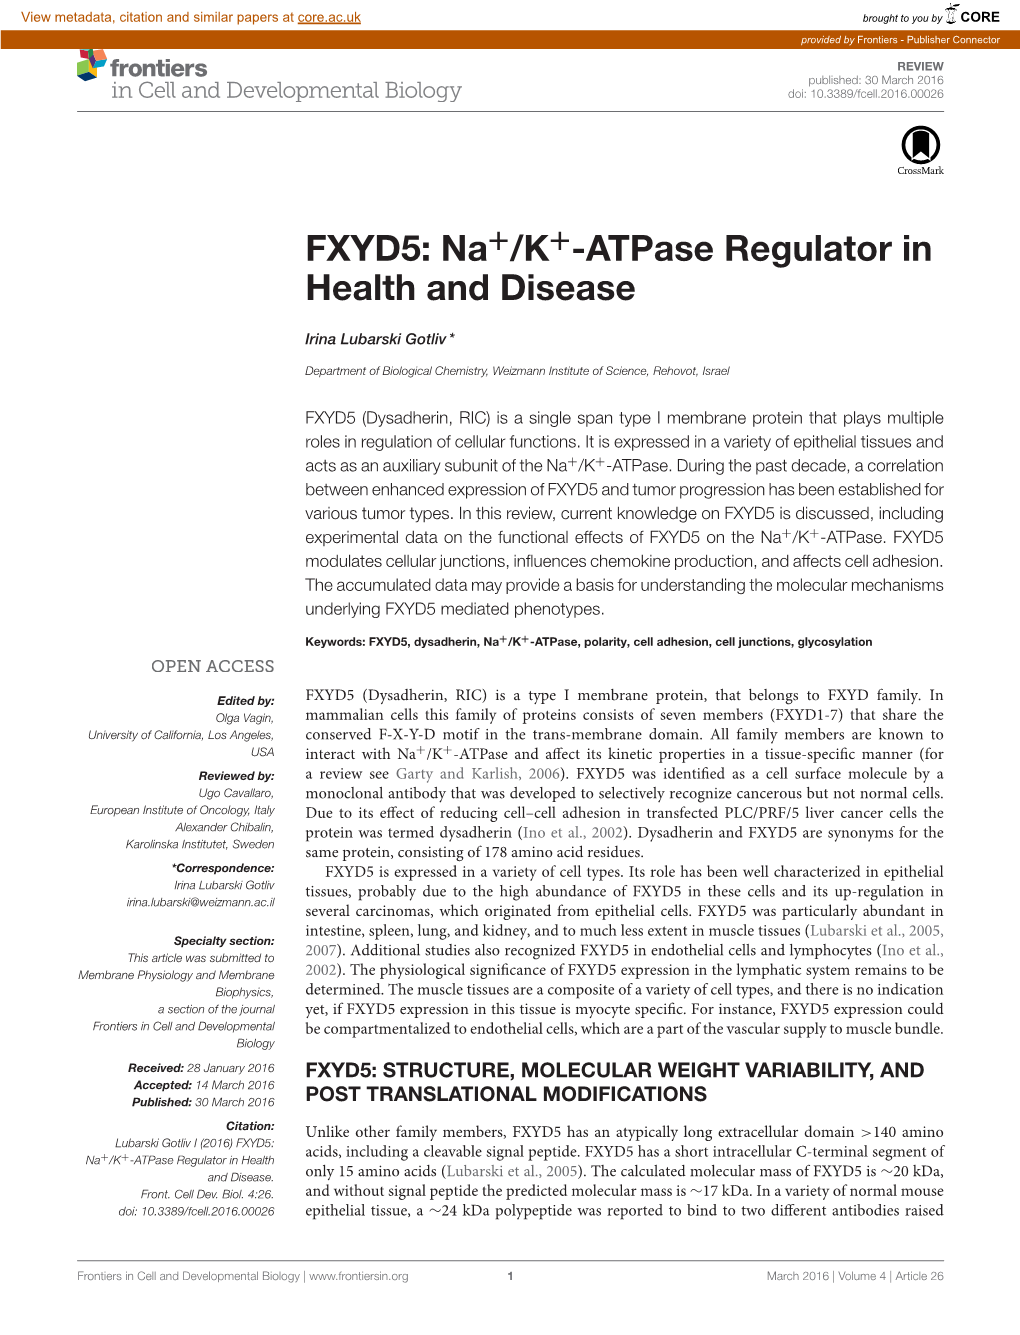 FXYD5: Na+/K+-Atpase Regulator in Health and Disease